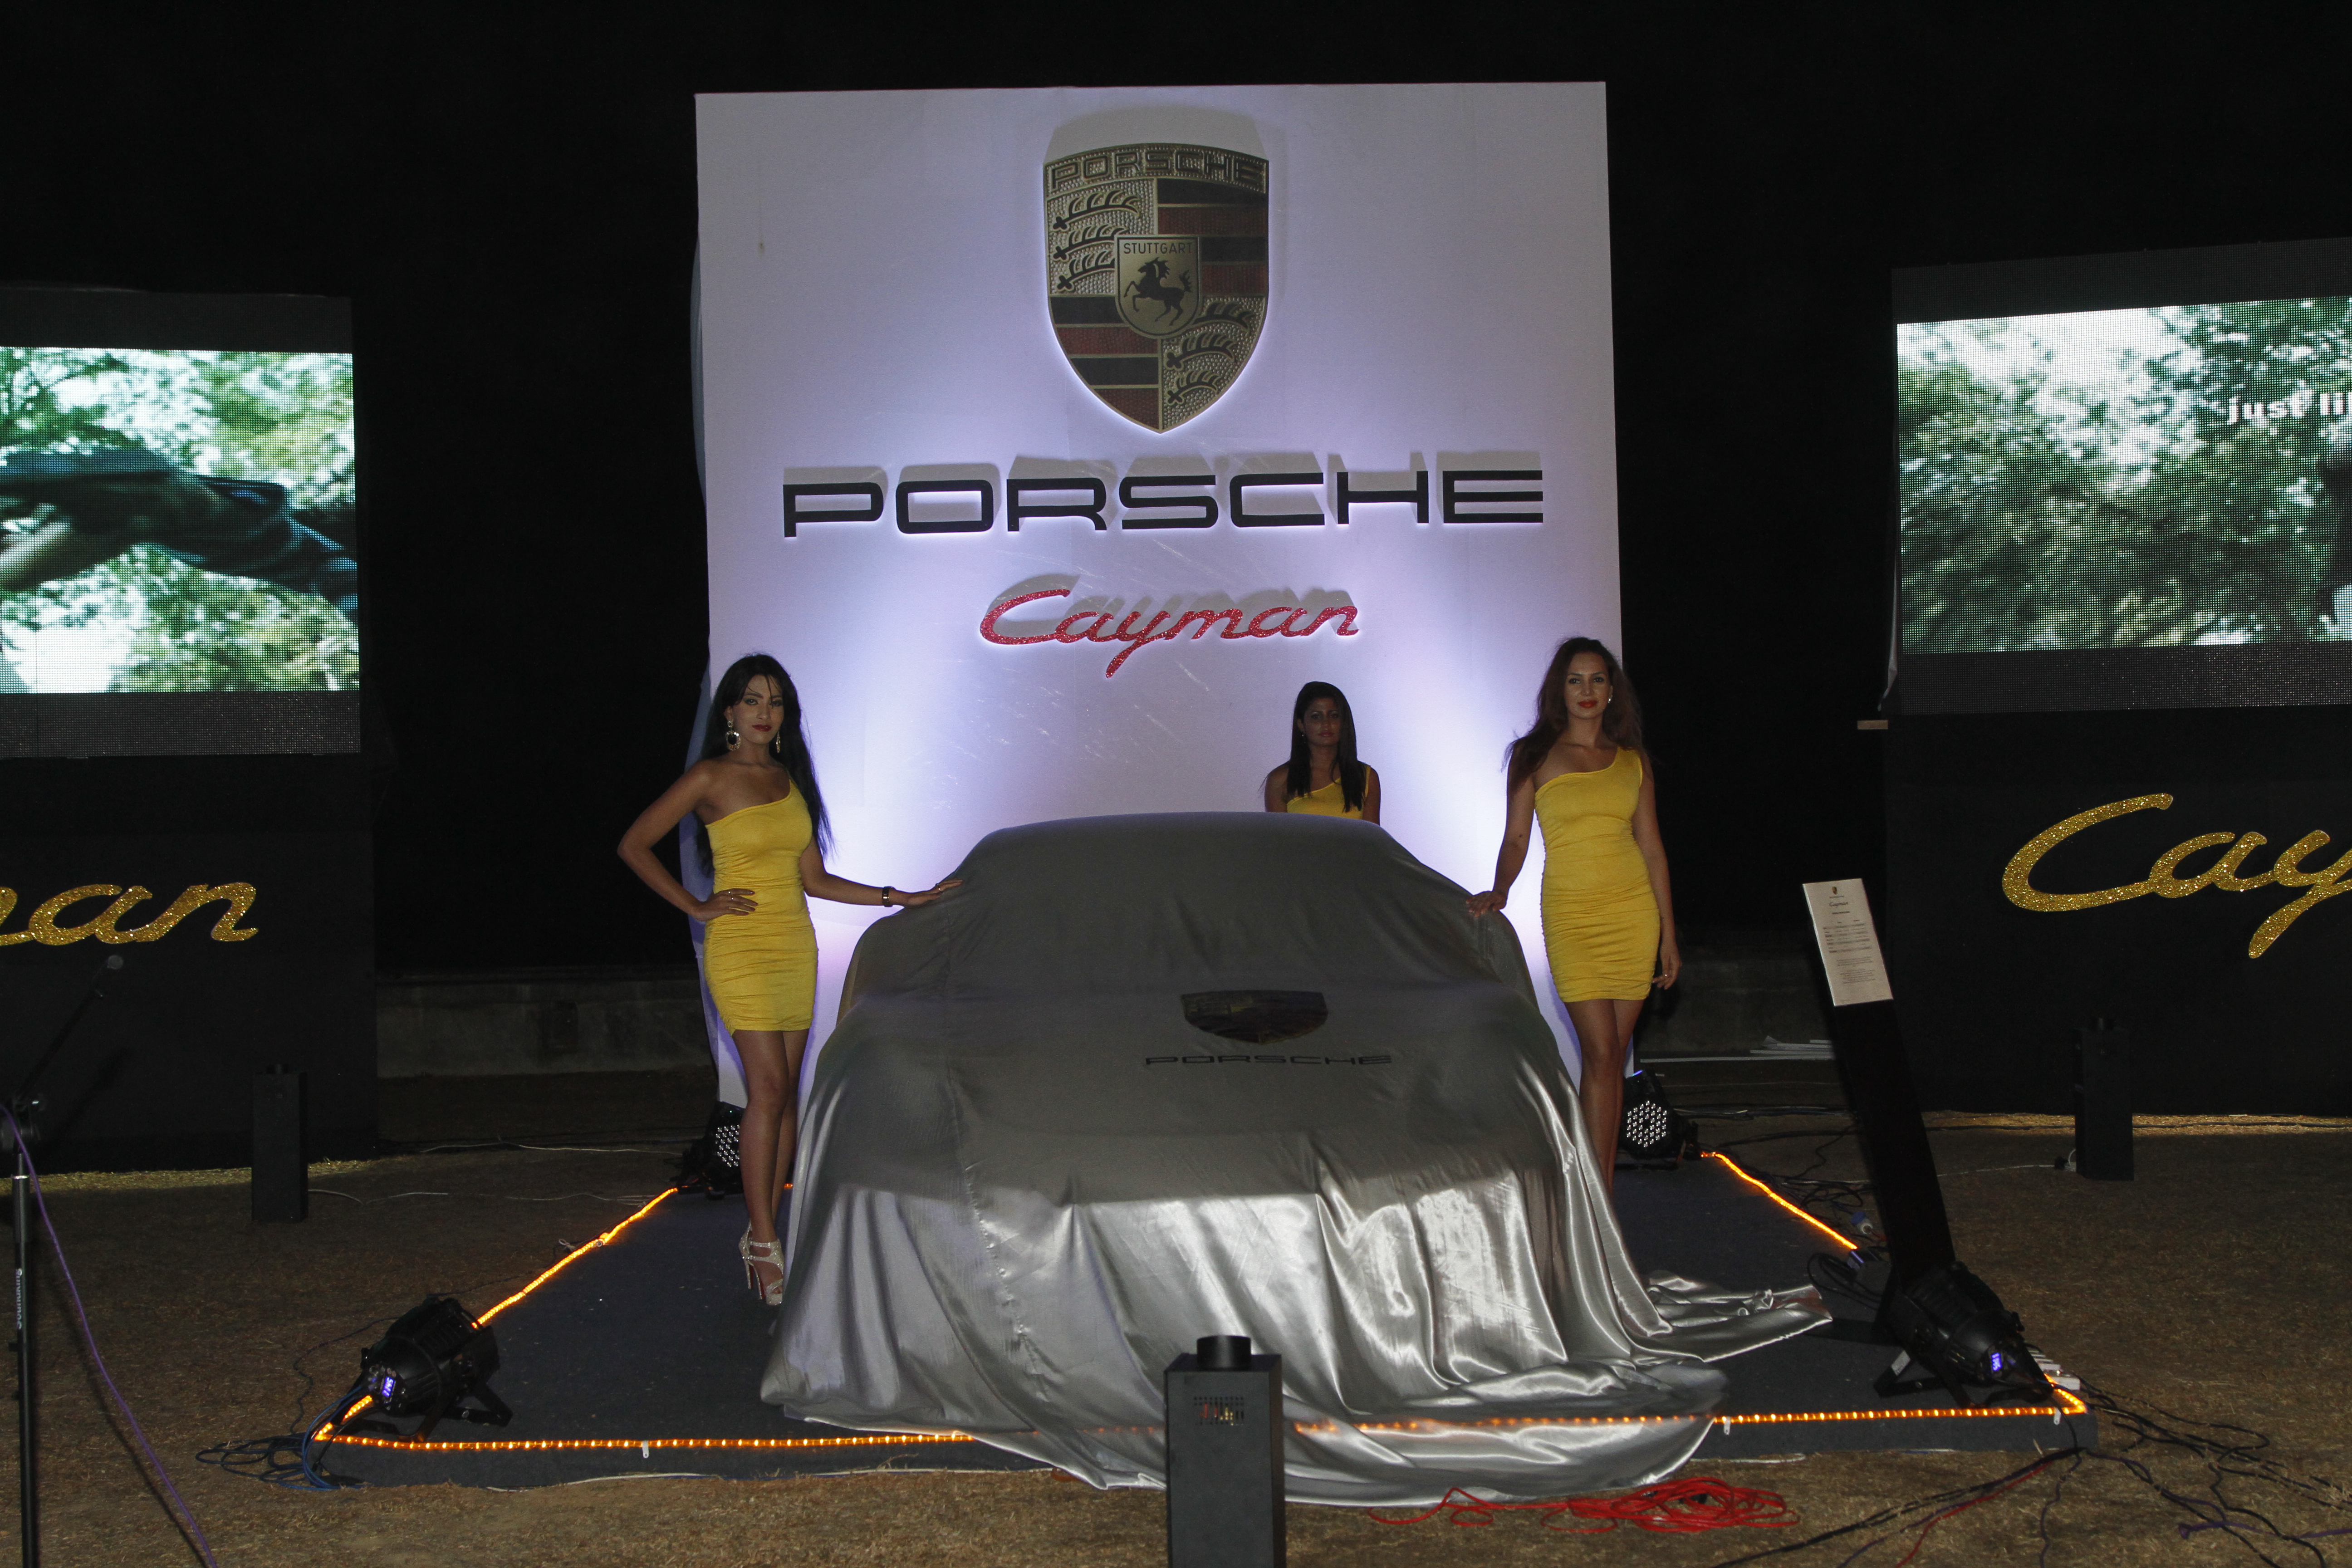 Launch of the new Porsche Cayman in Sri Lanka